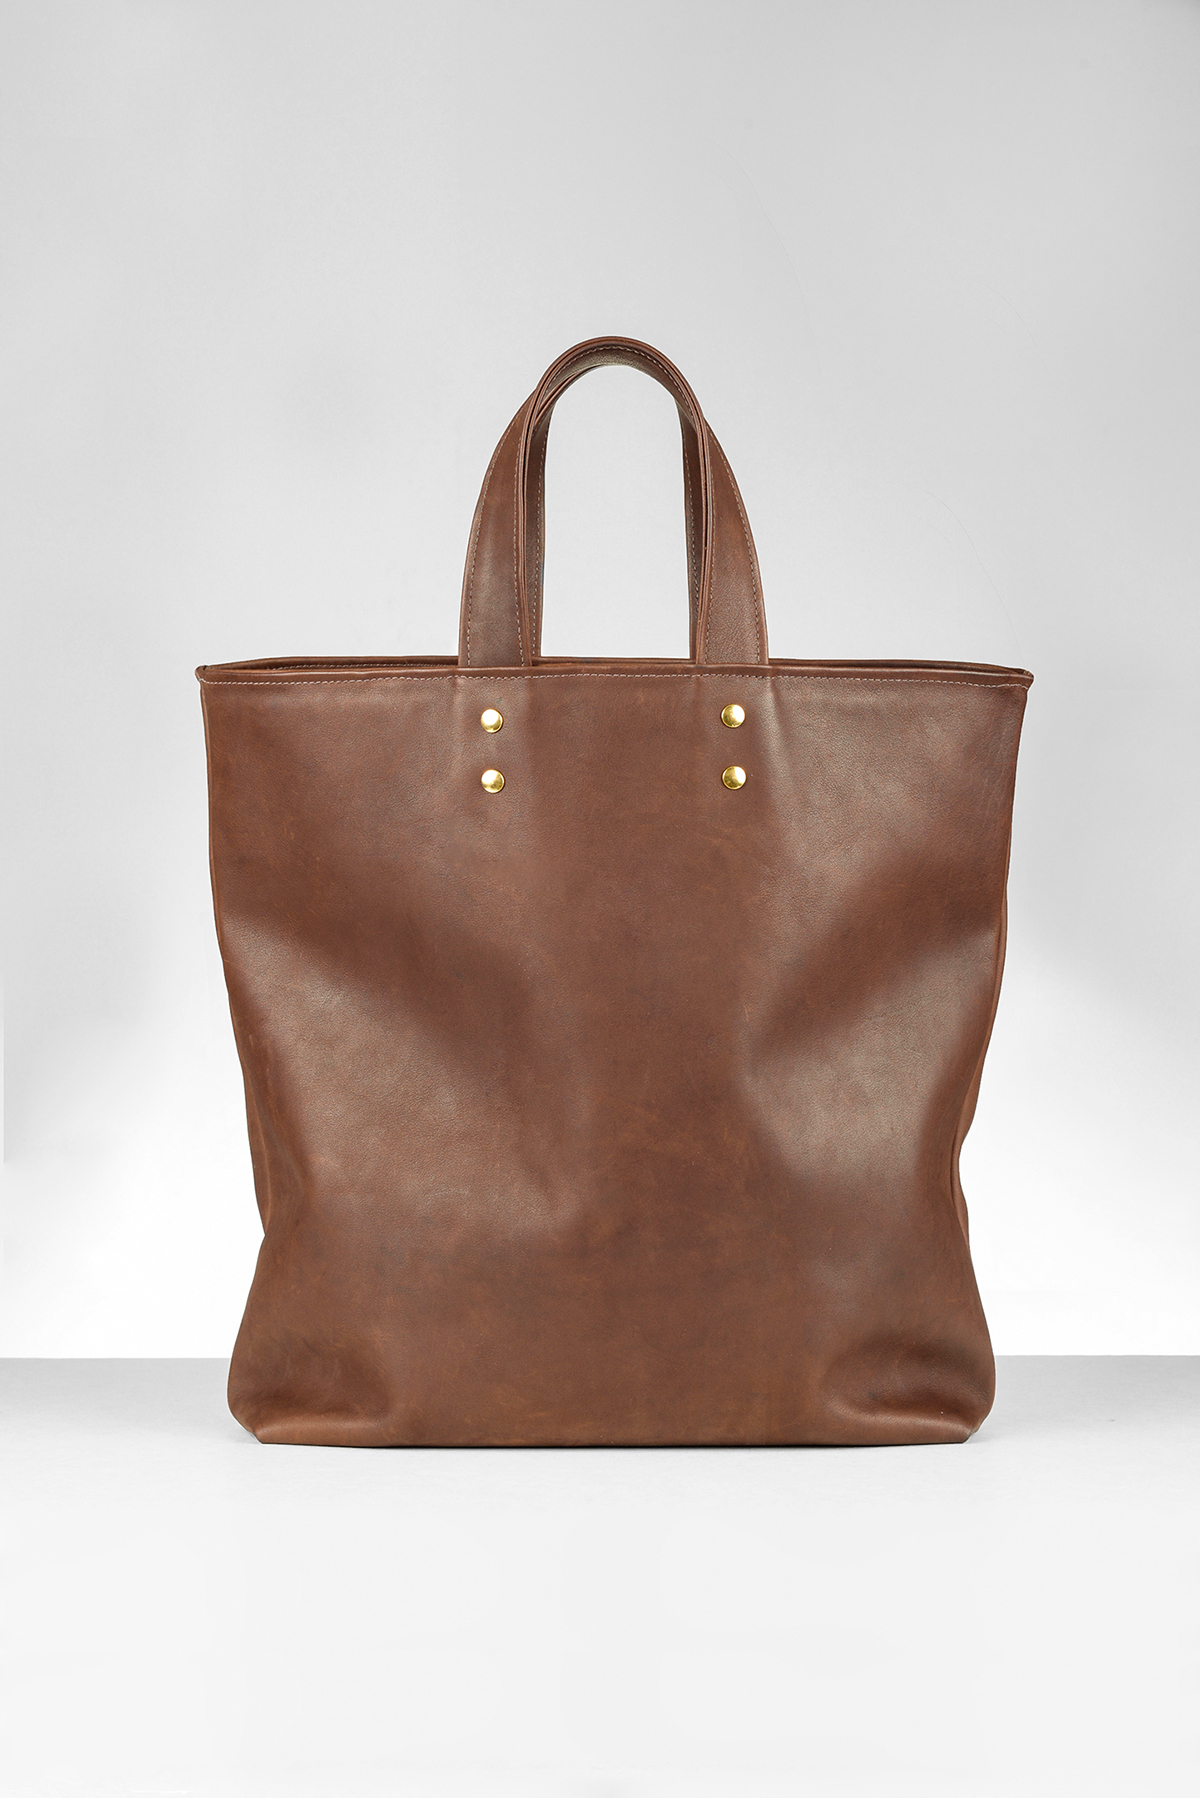 accessories handbag handbags handmade Tote leather